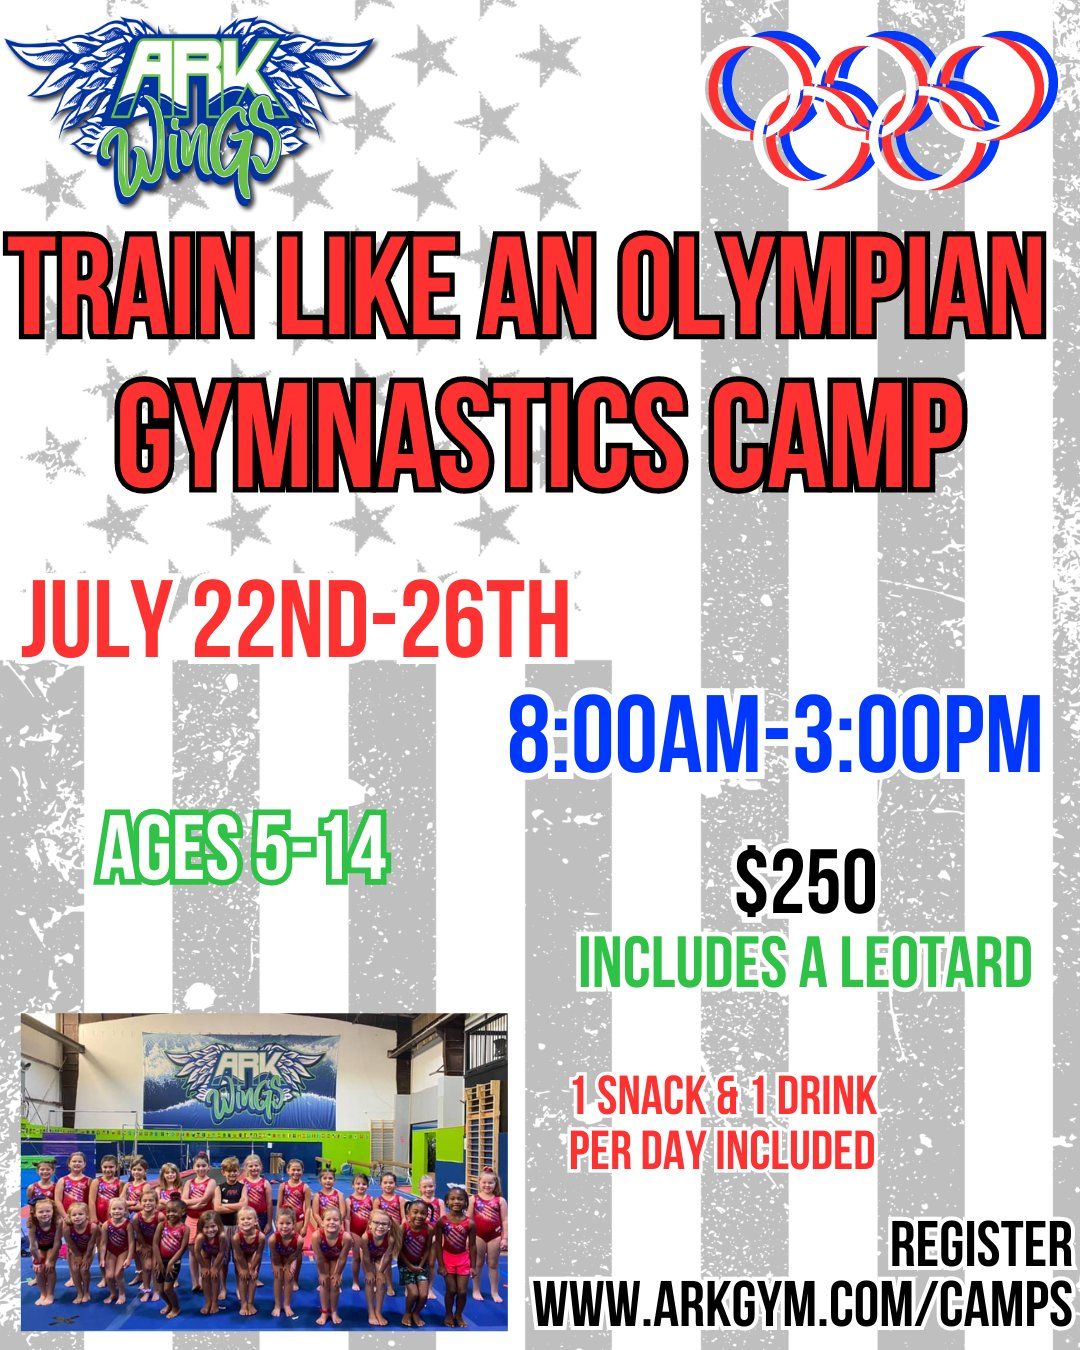 ARK WinGS Gym Train Like An Olympian Gymnastics Summer Camp!